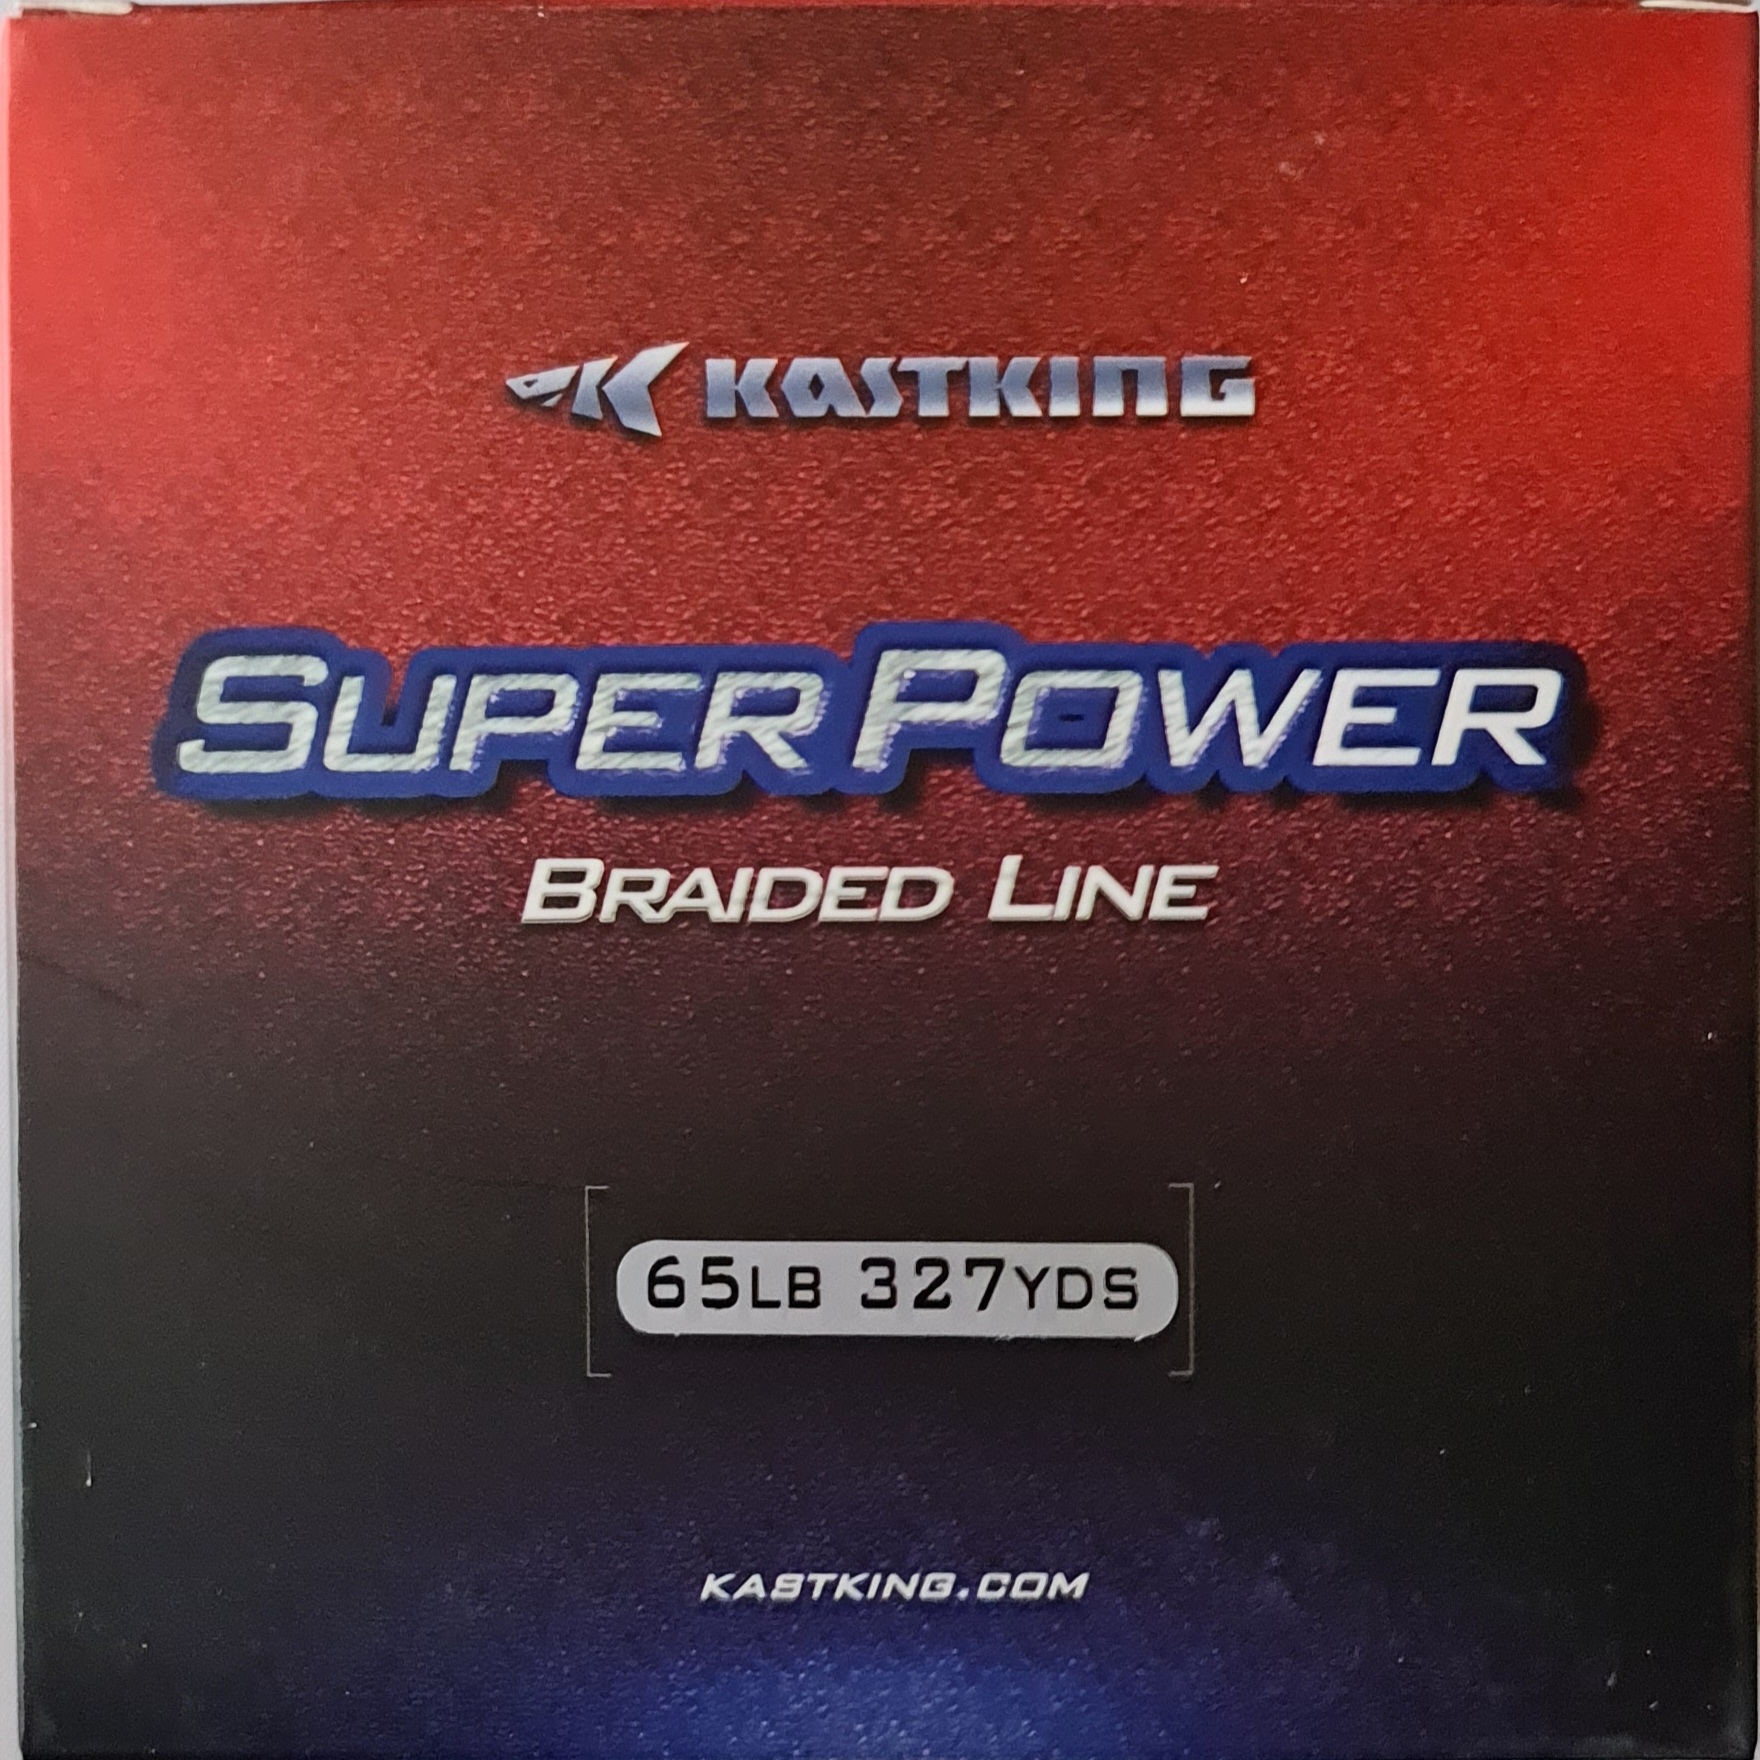 KastKing Super Power Braided Line 65lb 327yds